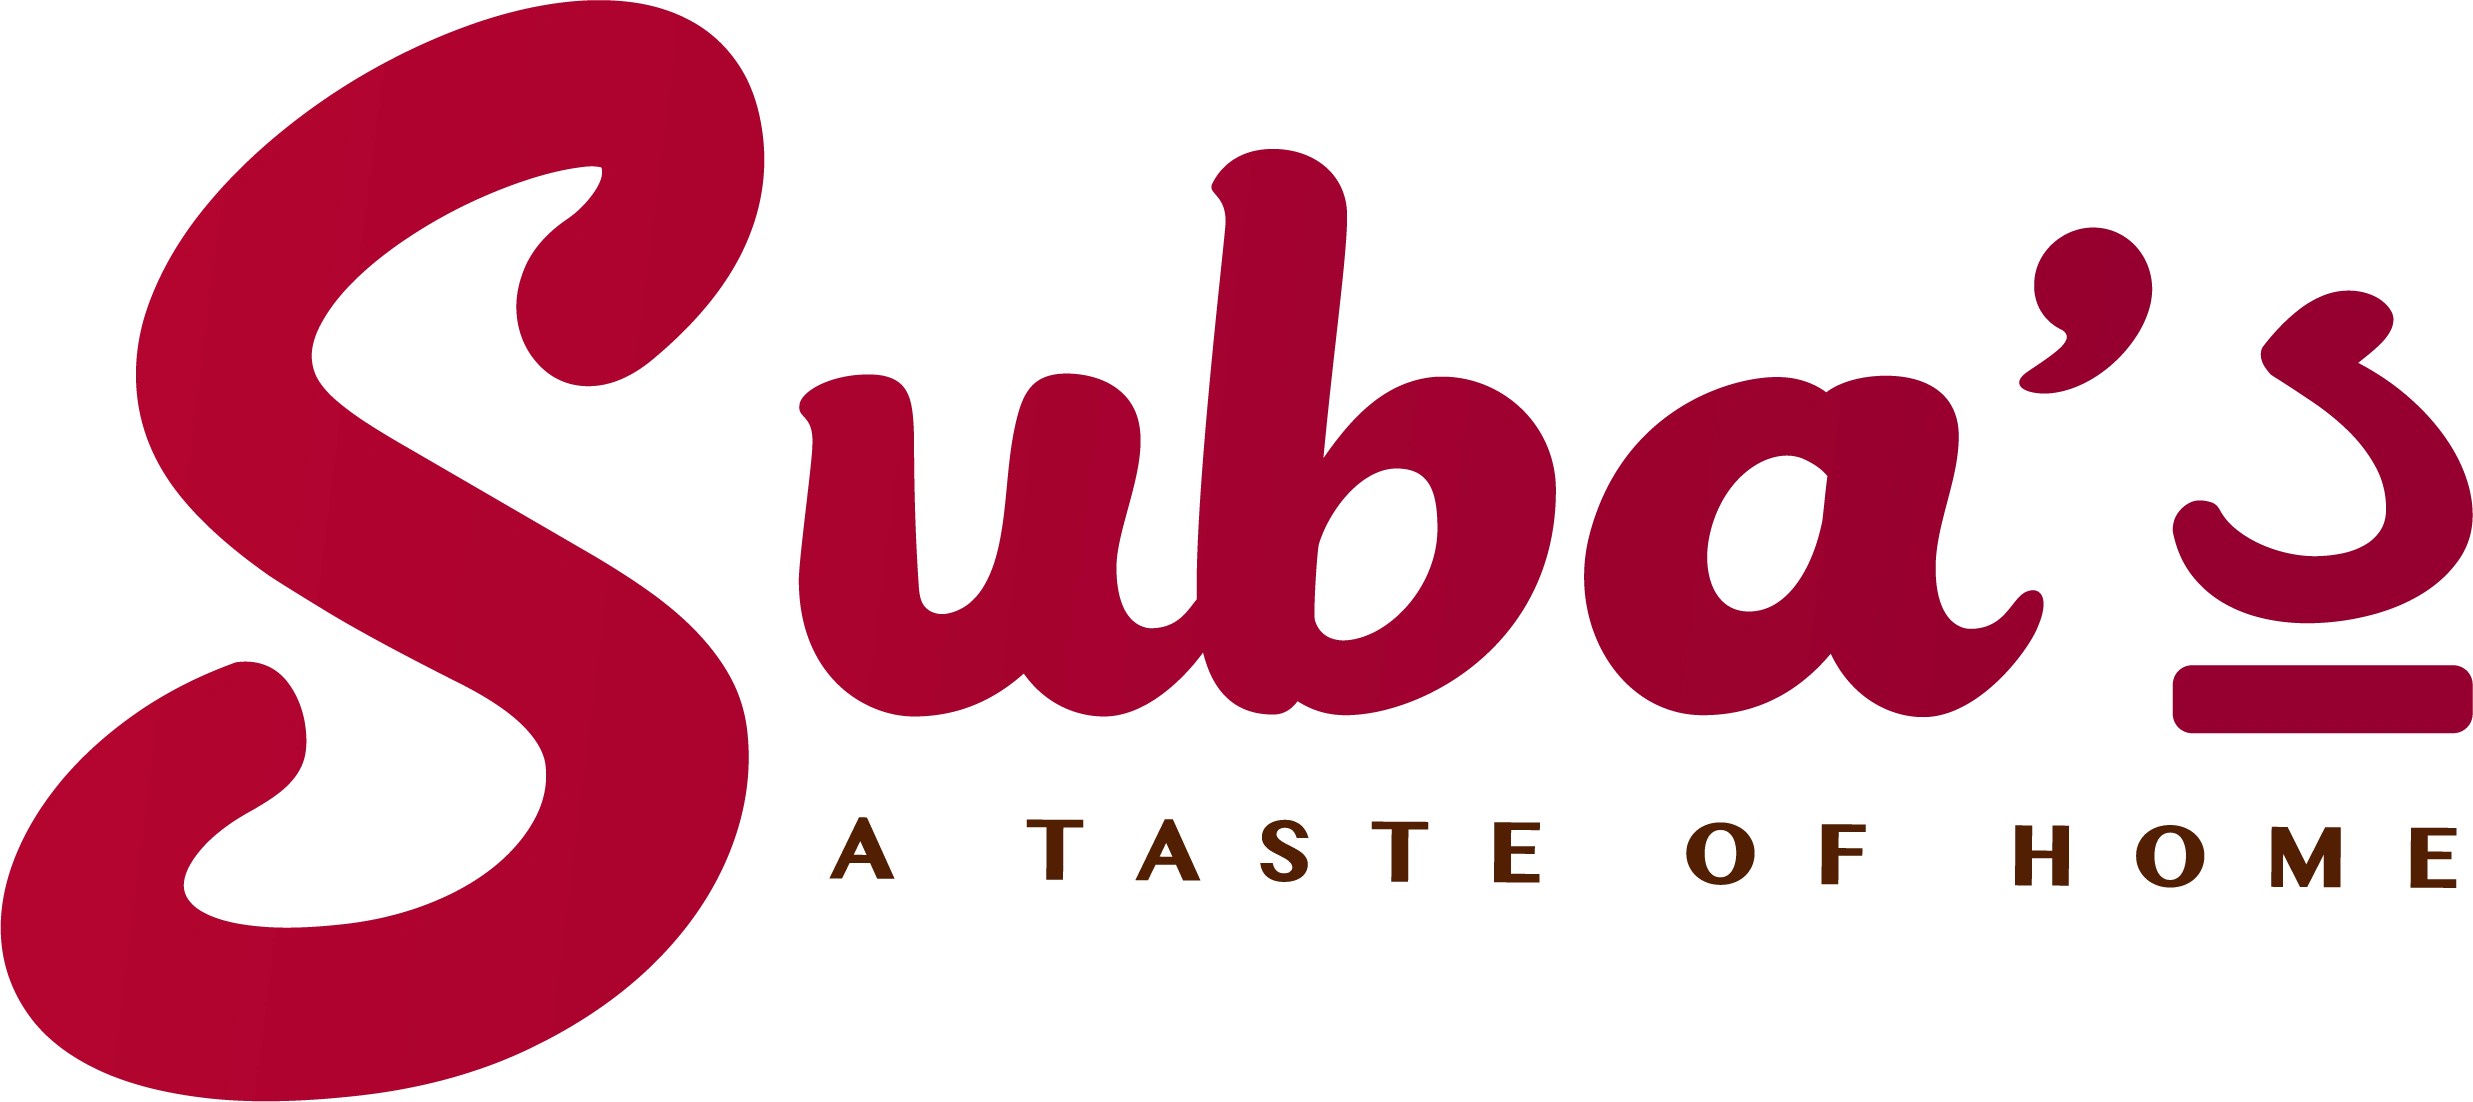 Suba's Diner